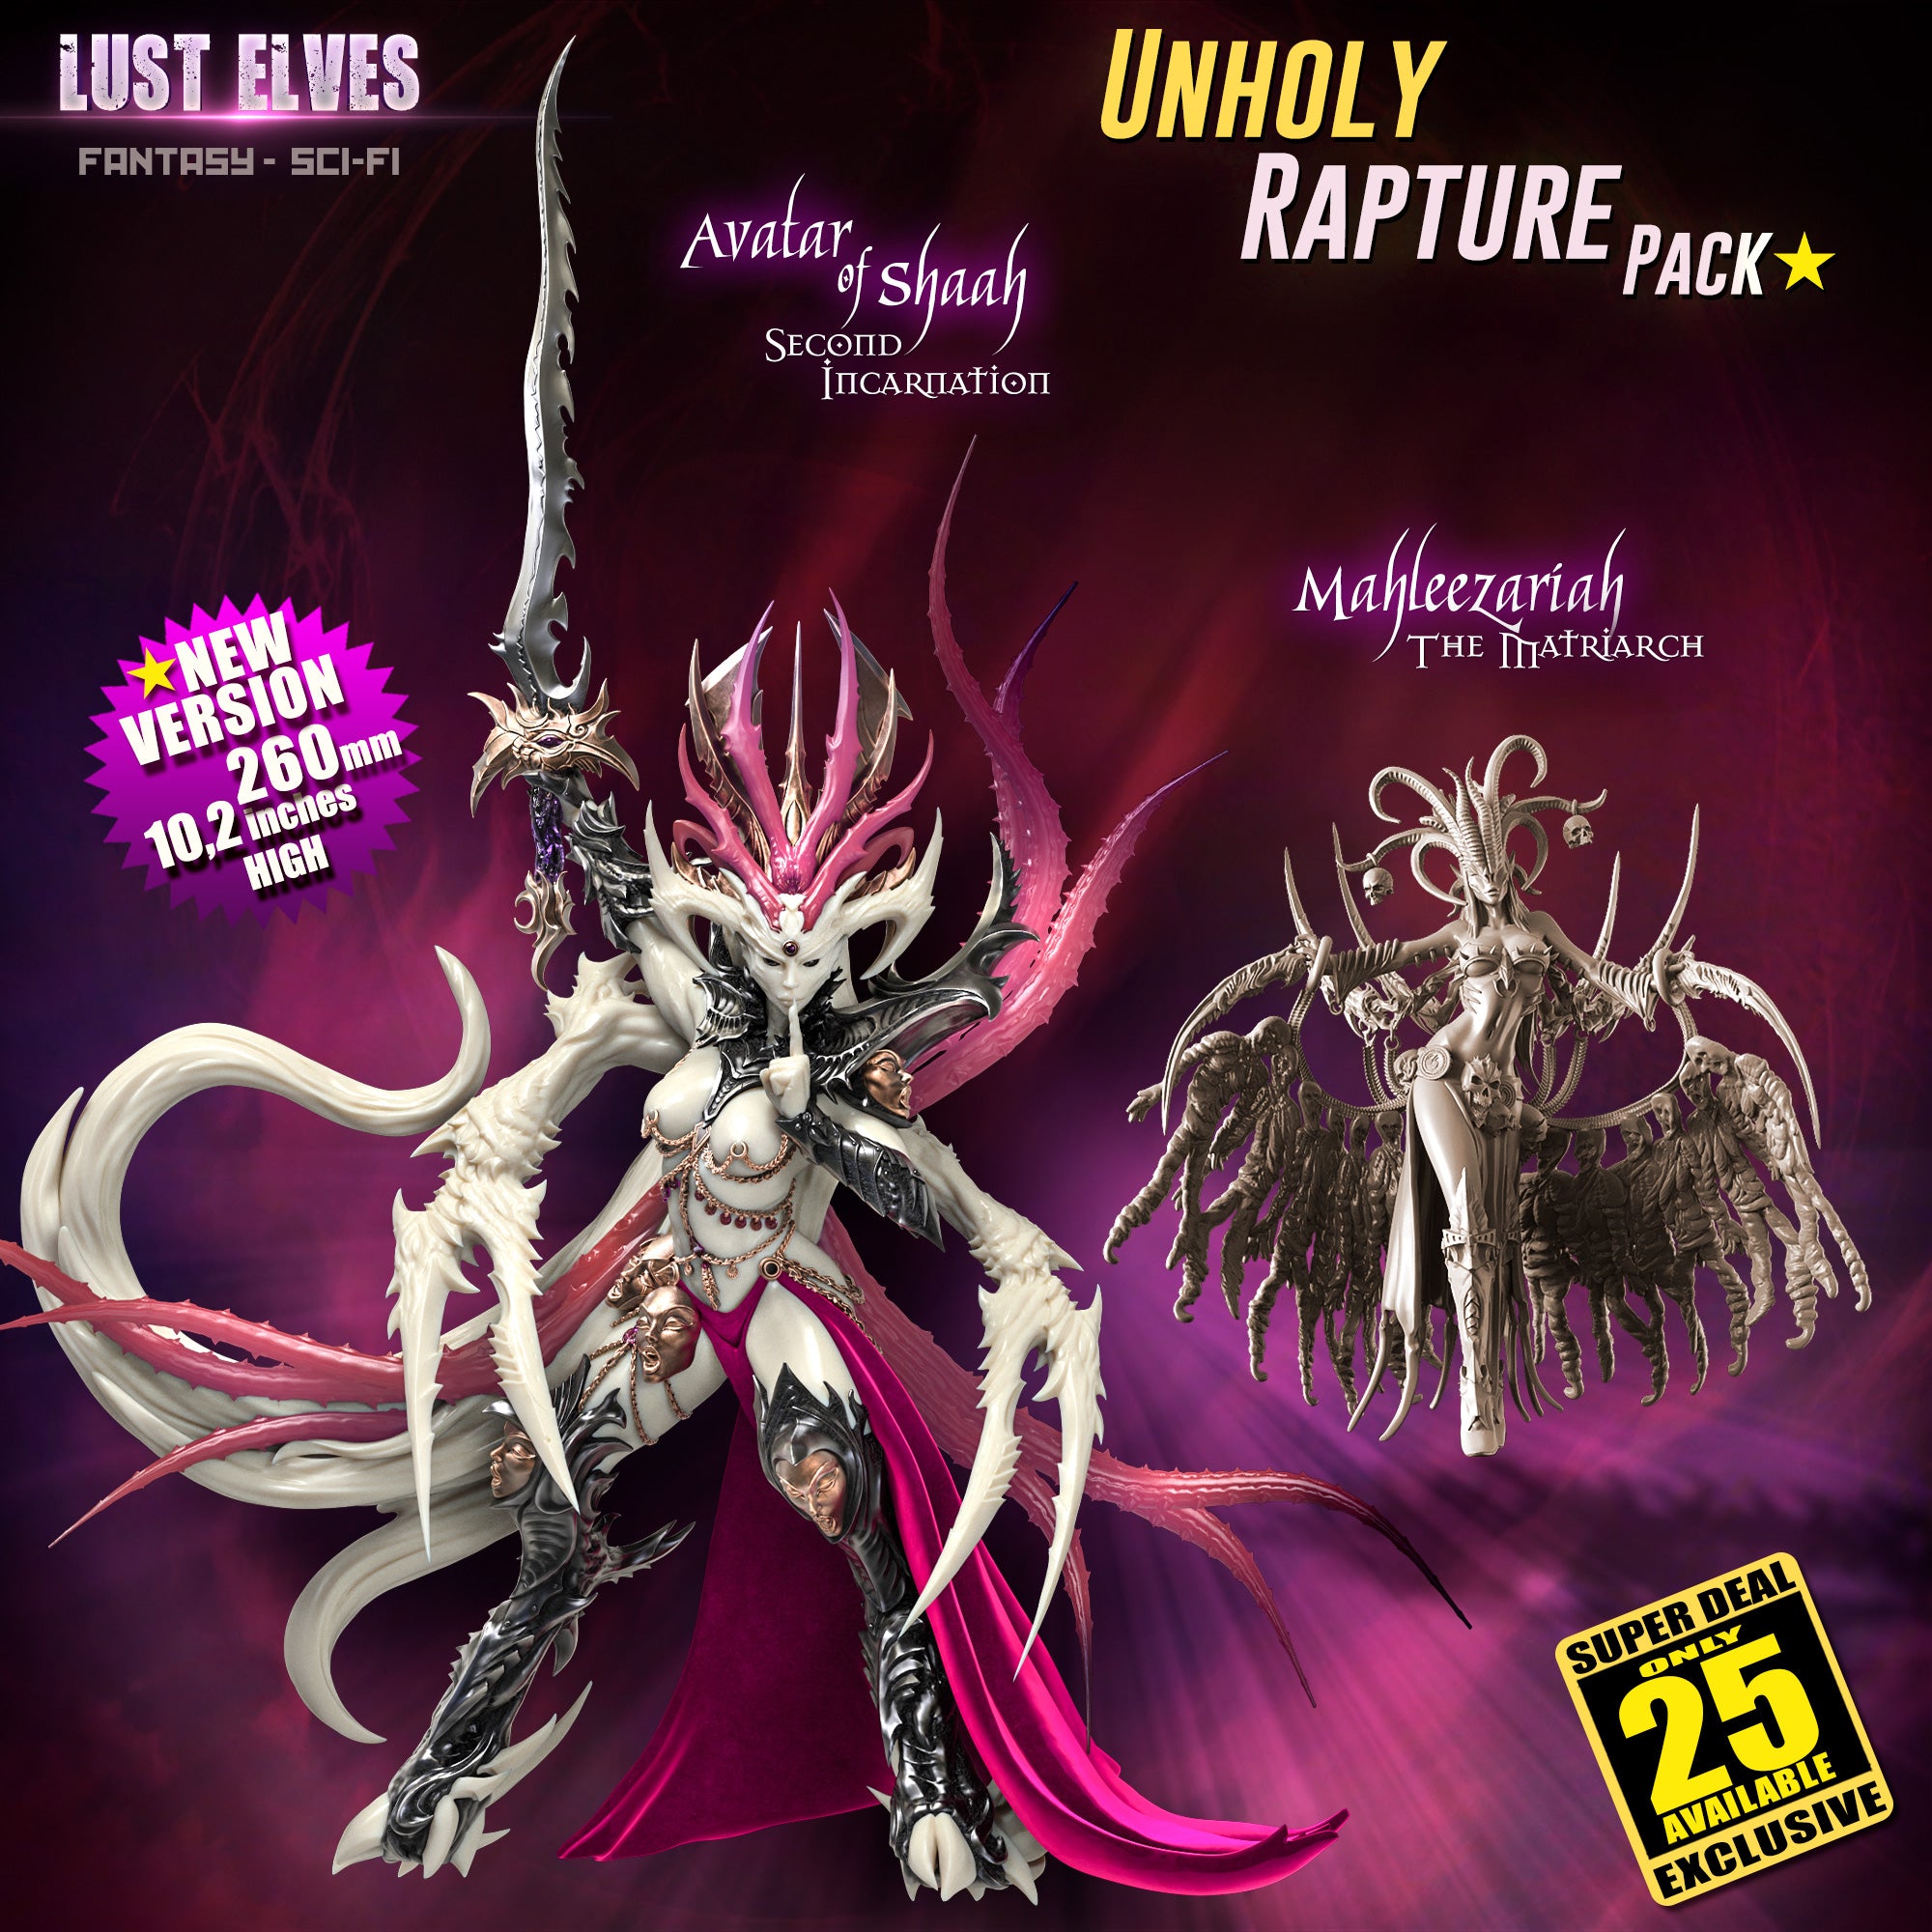 Unholy Rapture Pack (LE - F/SF) (včetně Avatar Shaah - 2. inkarnace)